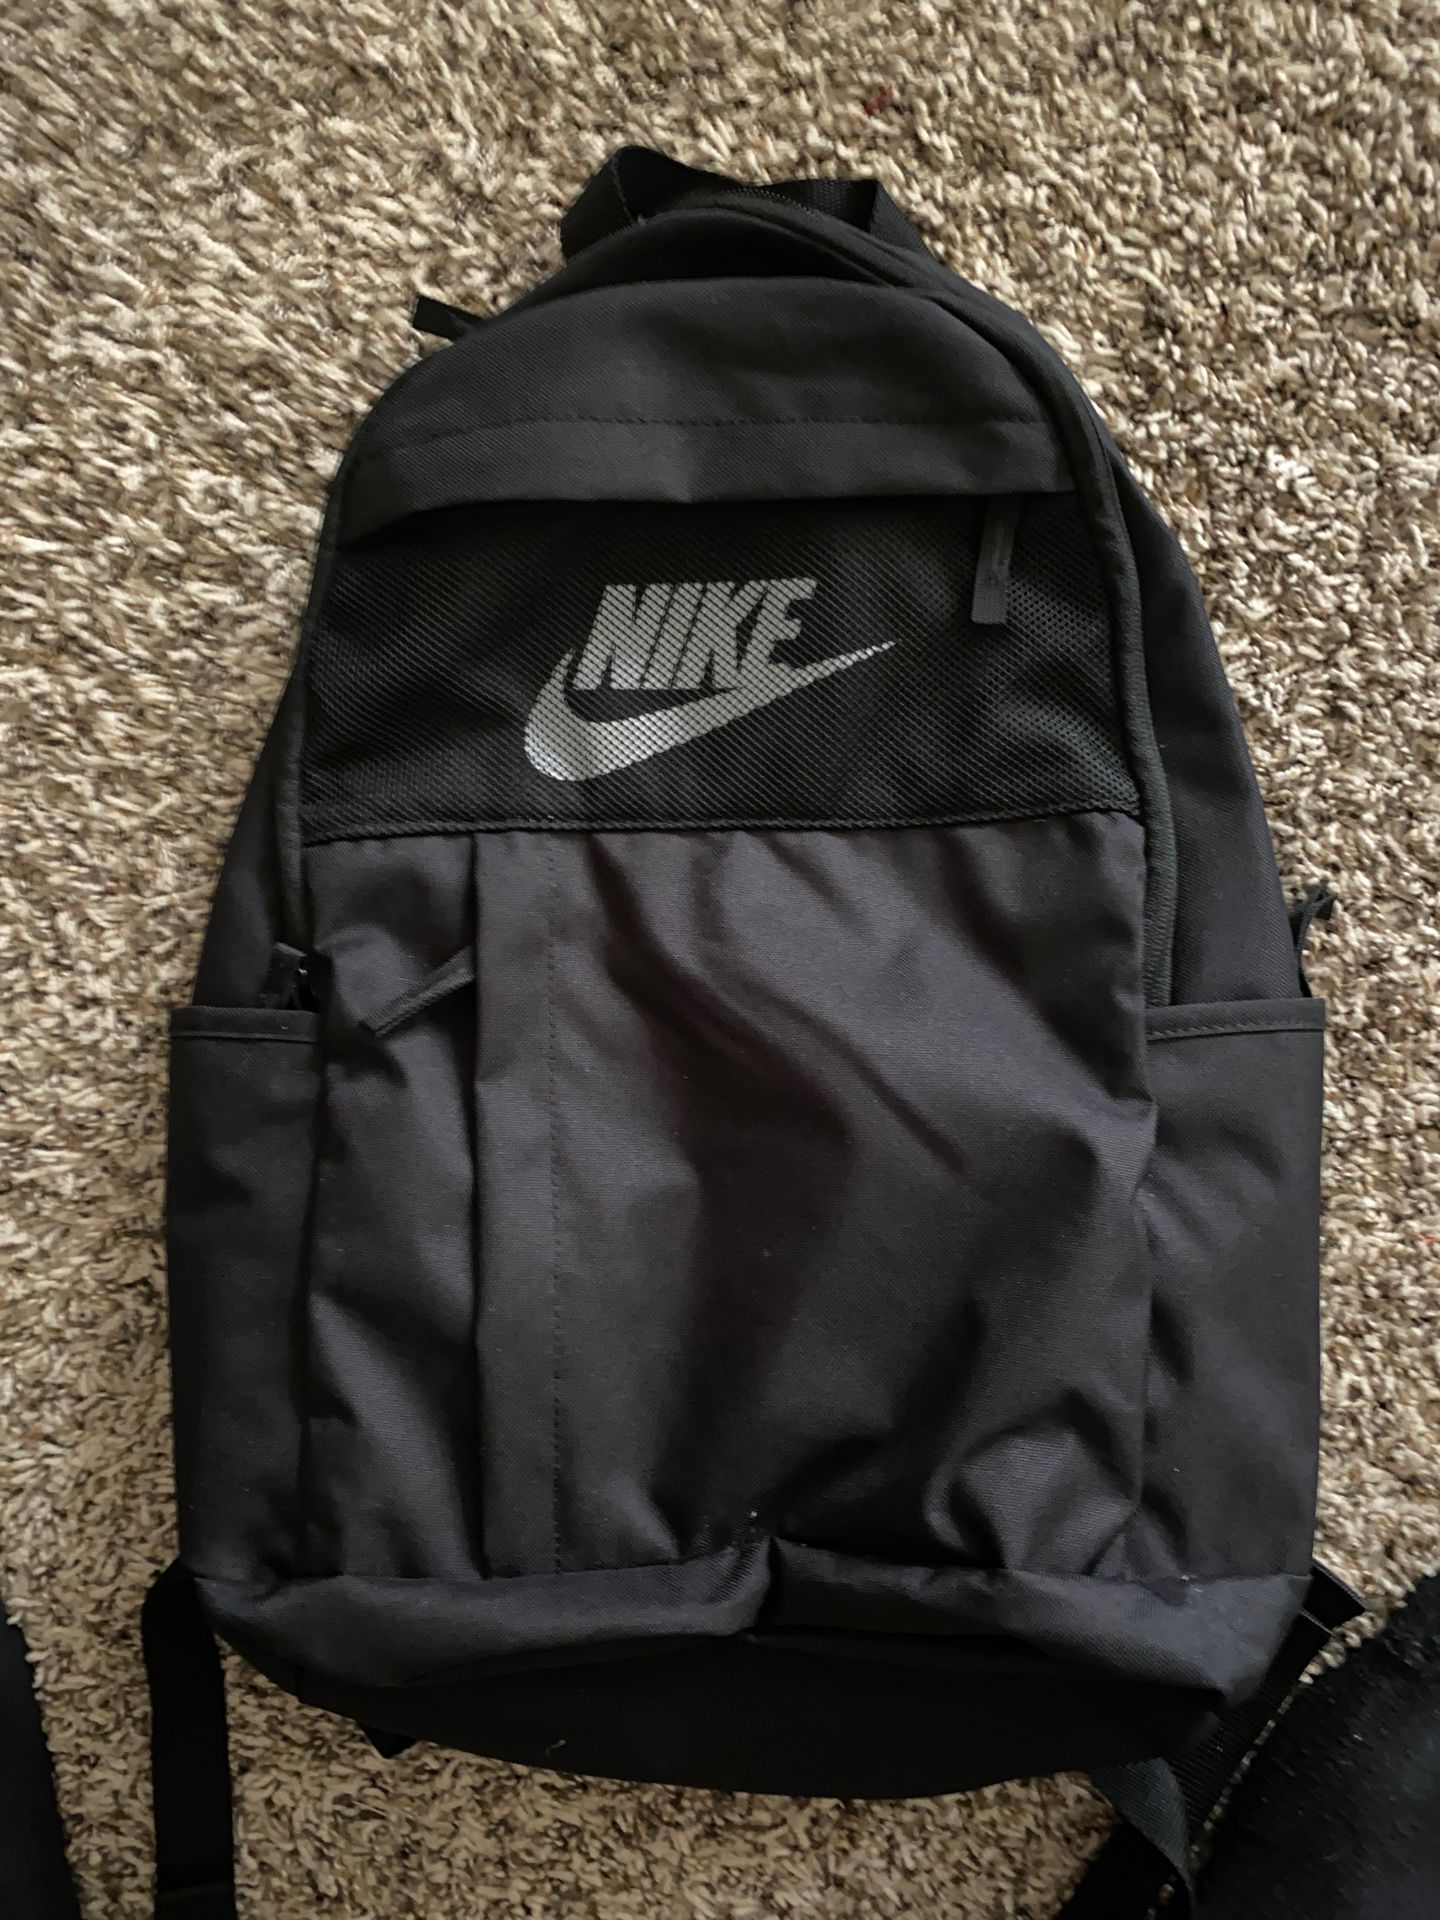 Nike book bag